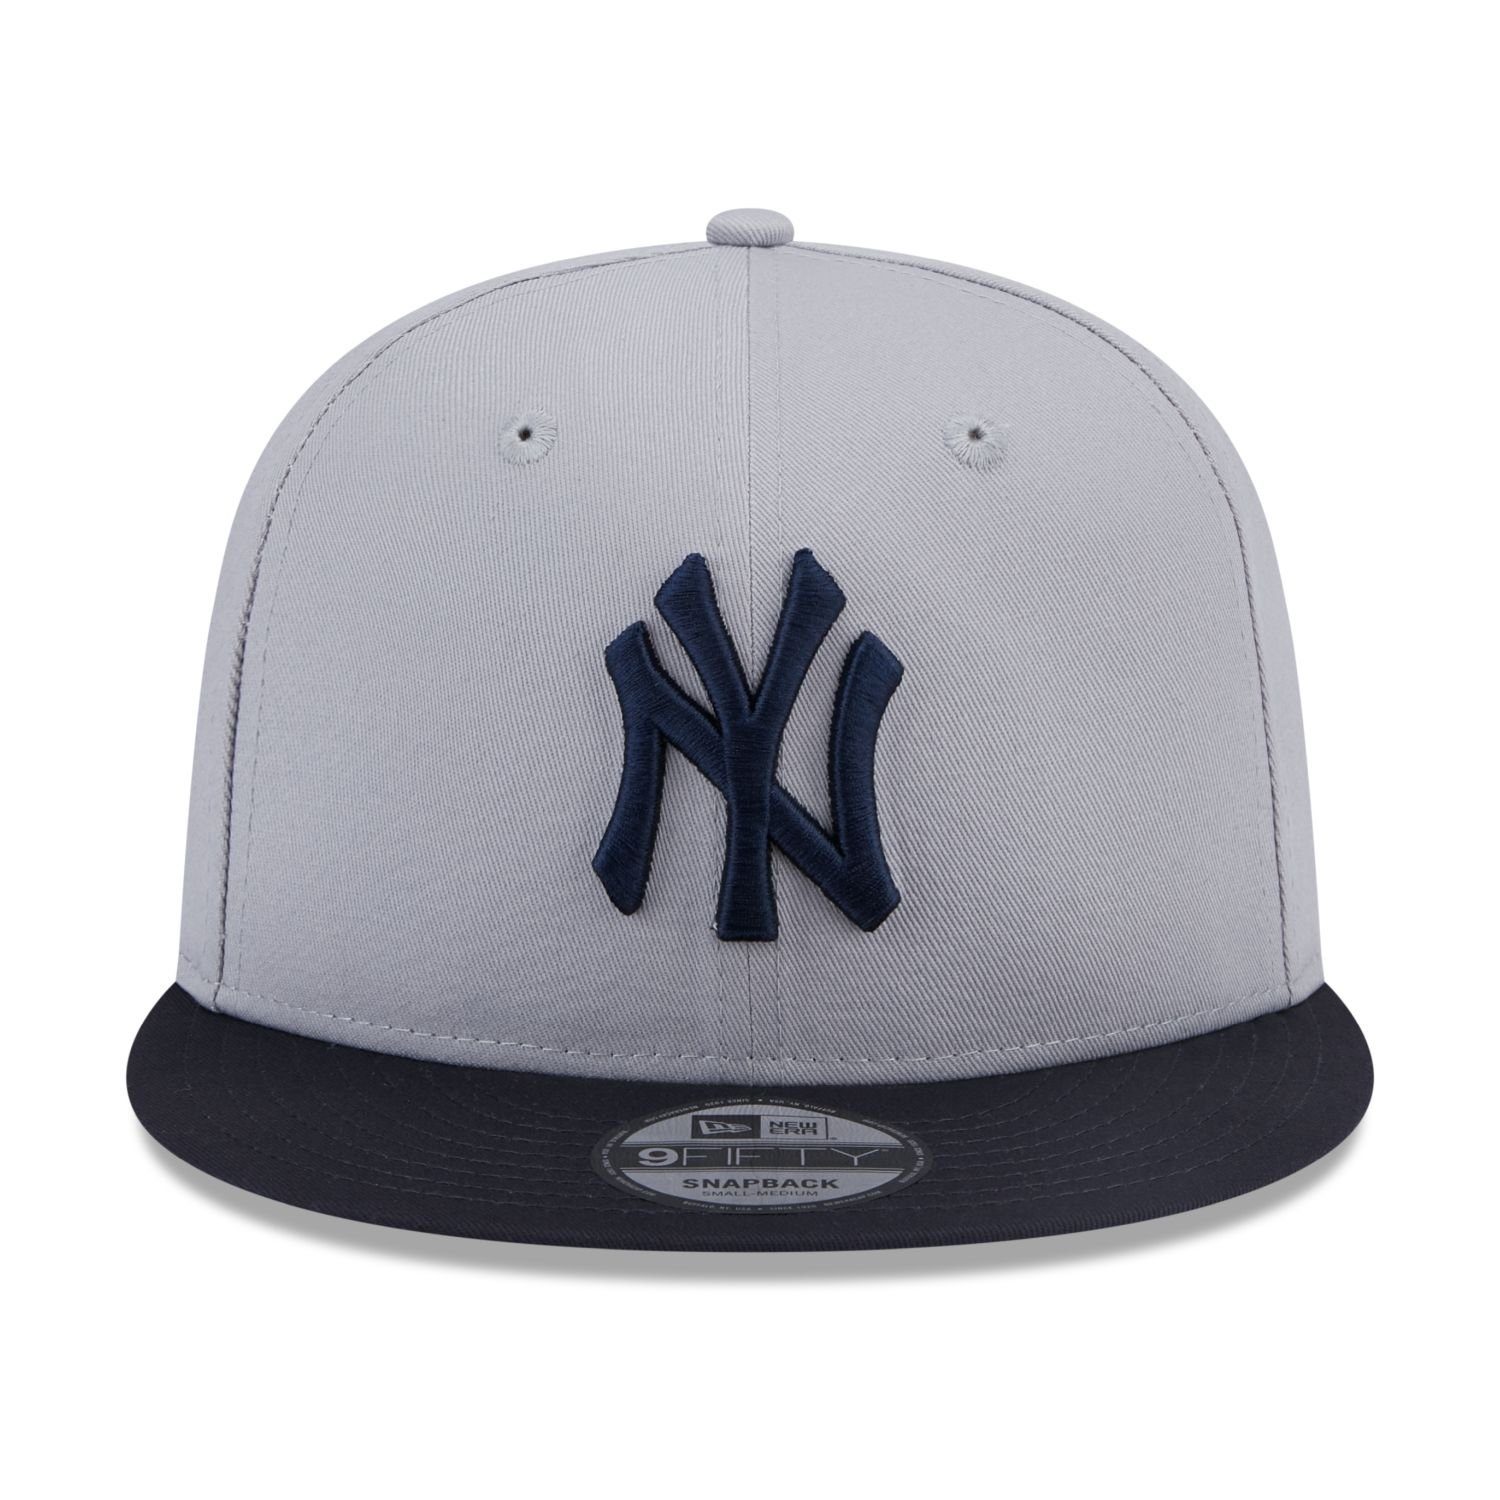 Era New 9Fifty York Yankees New Cap Snapback SIDEPATCH